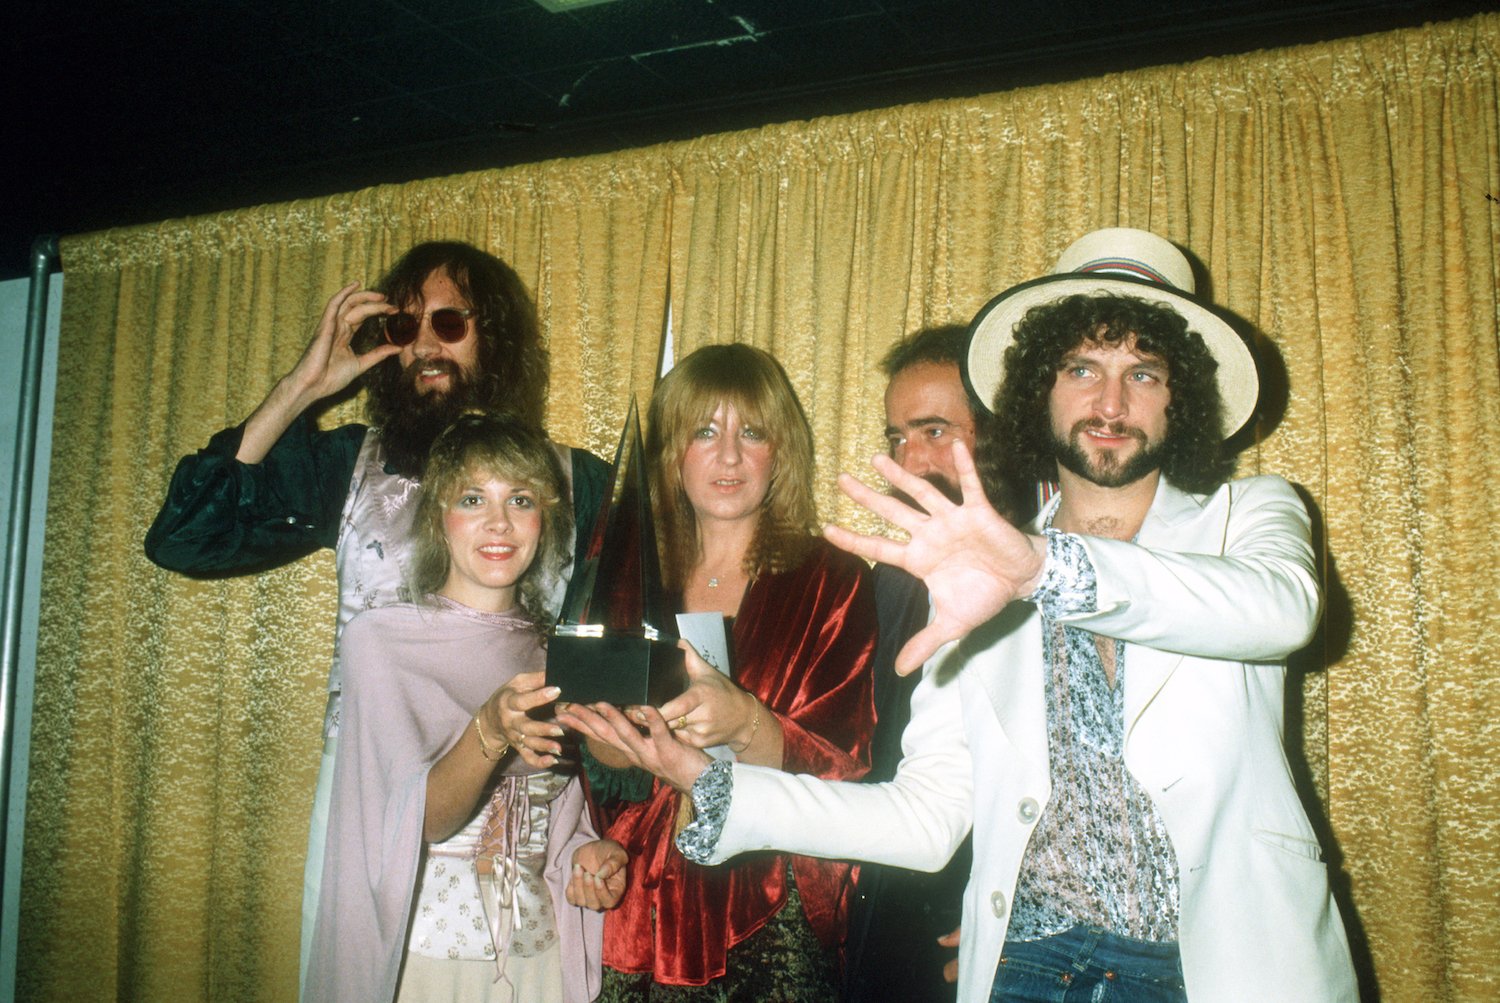 Fleetwood Mac (members Mick Fleetwood, Stevie Nicks, Christine McVie, John McVie, and Lindsey Buckingham) pose backstage at the 5th American Music Awards